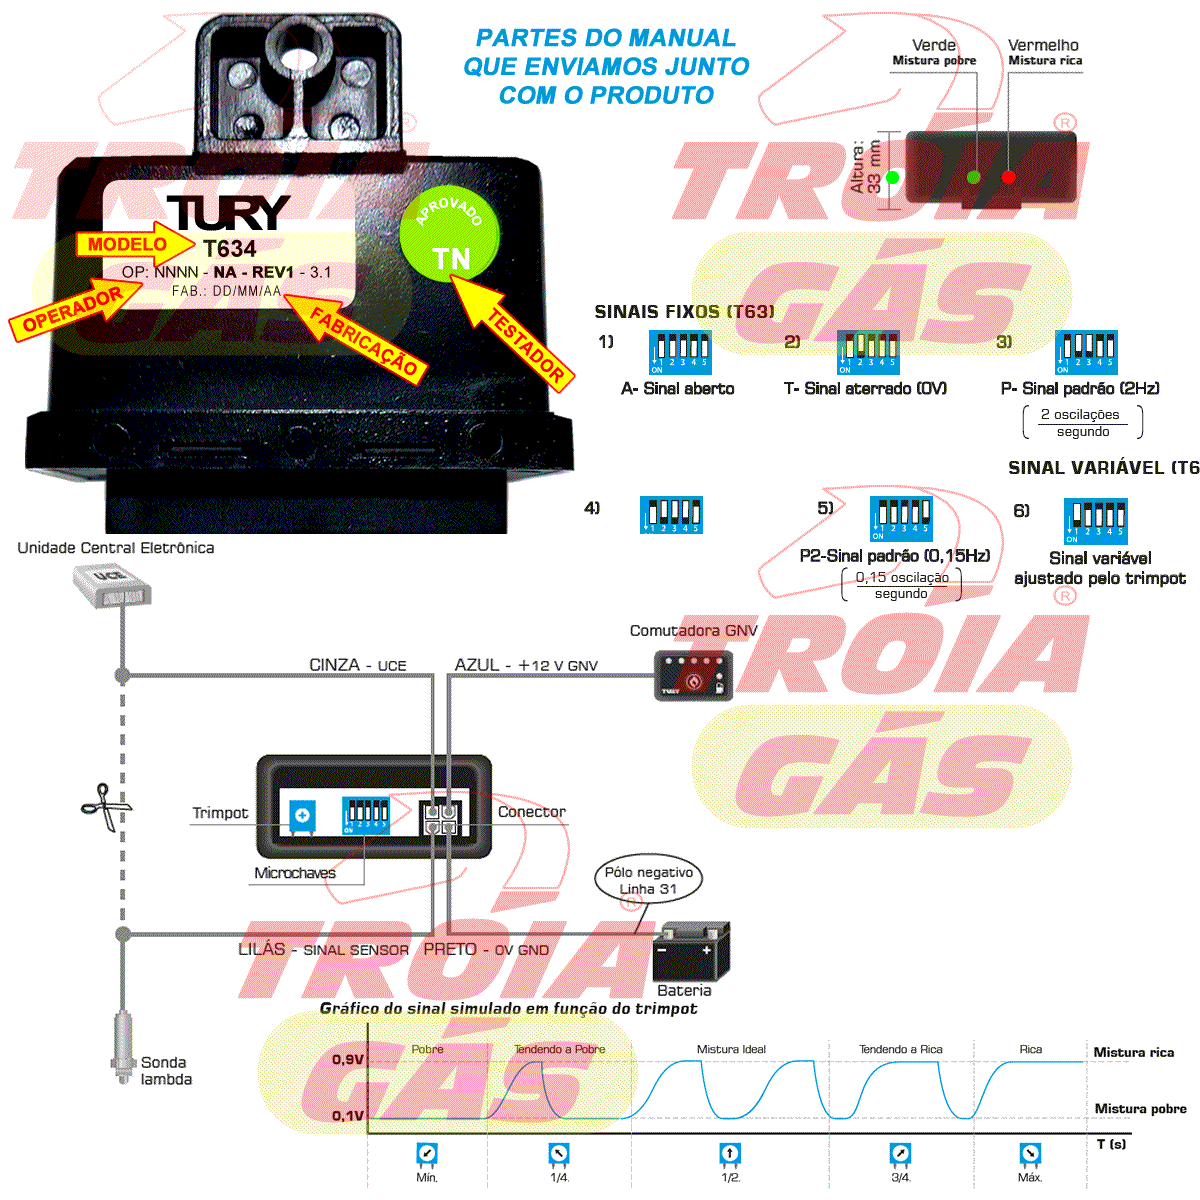 Simulador TURY GAS T634 Novo Sonda Lambda = T63 e T64 +